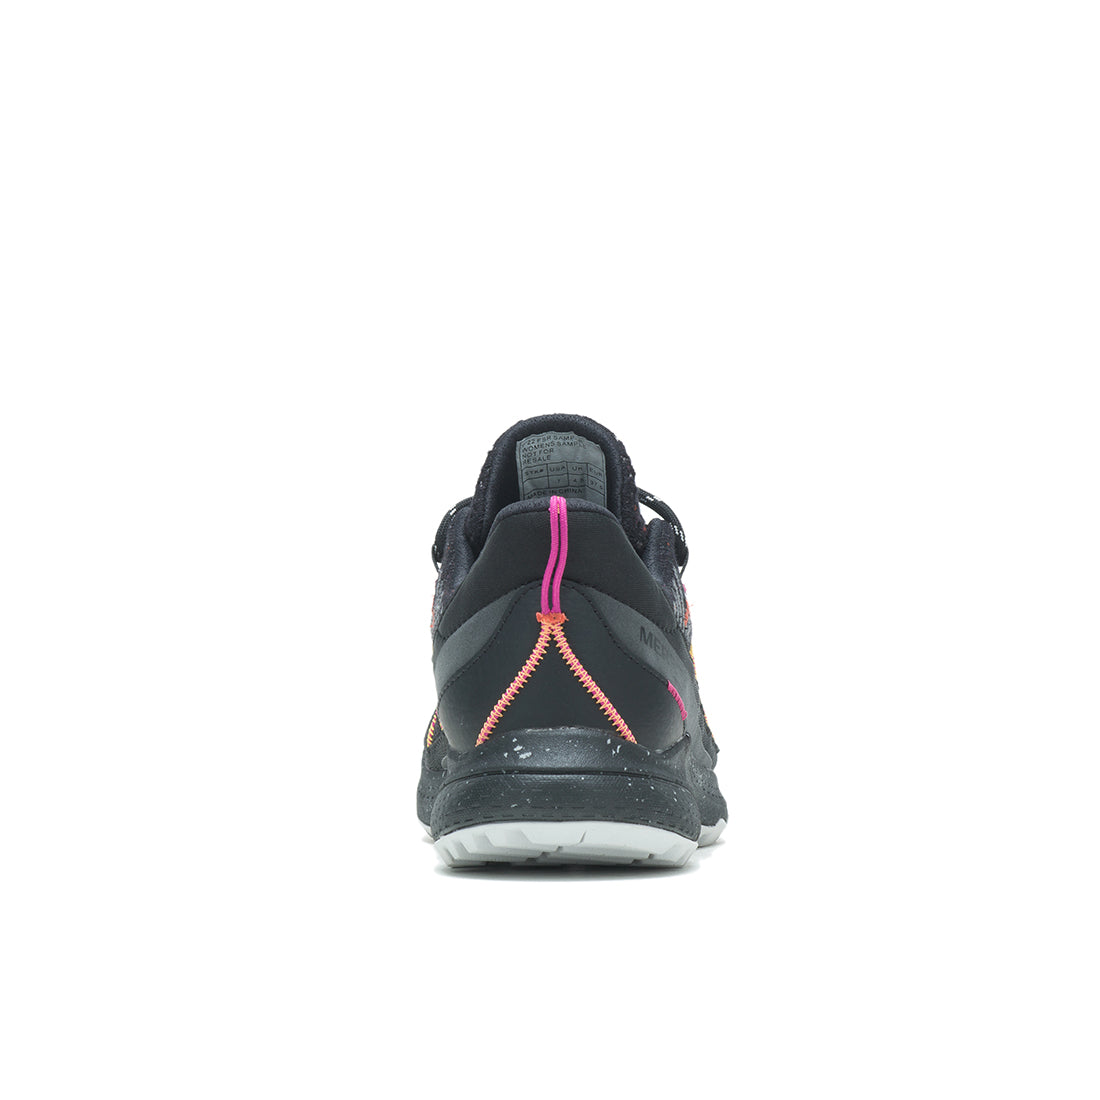 Merrell Bravada 2 Waterproof – Black/Fuschia Womens Hiking Shoes